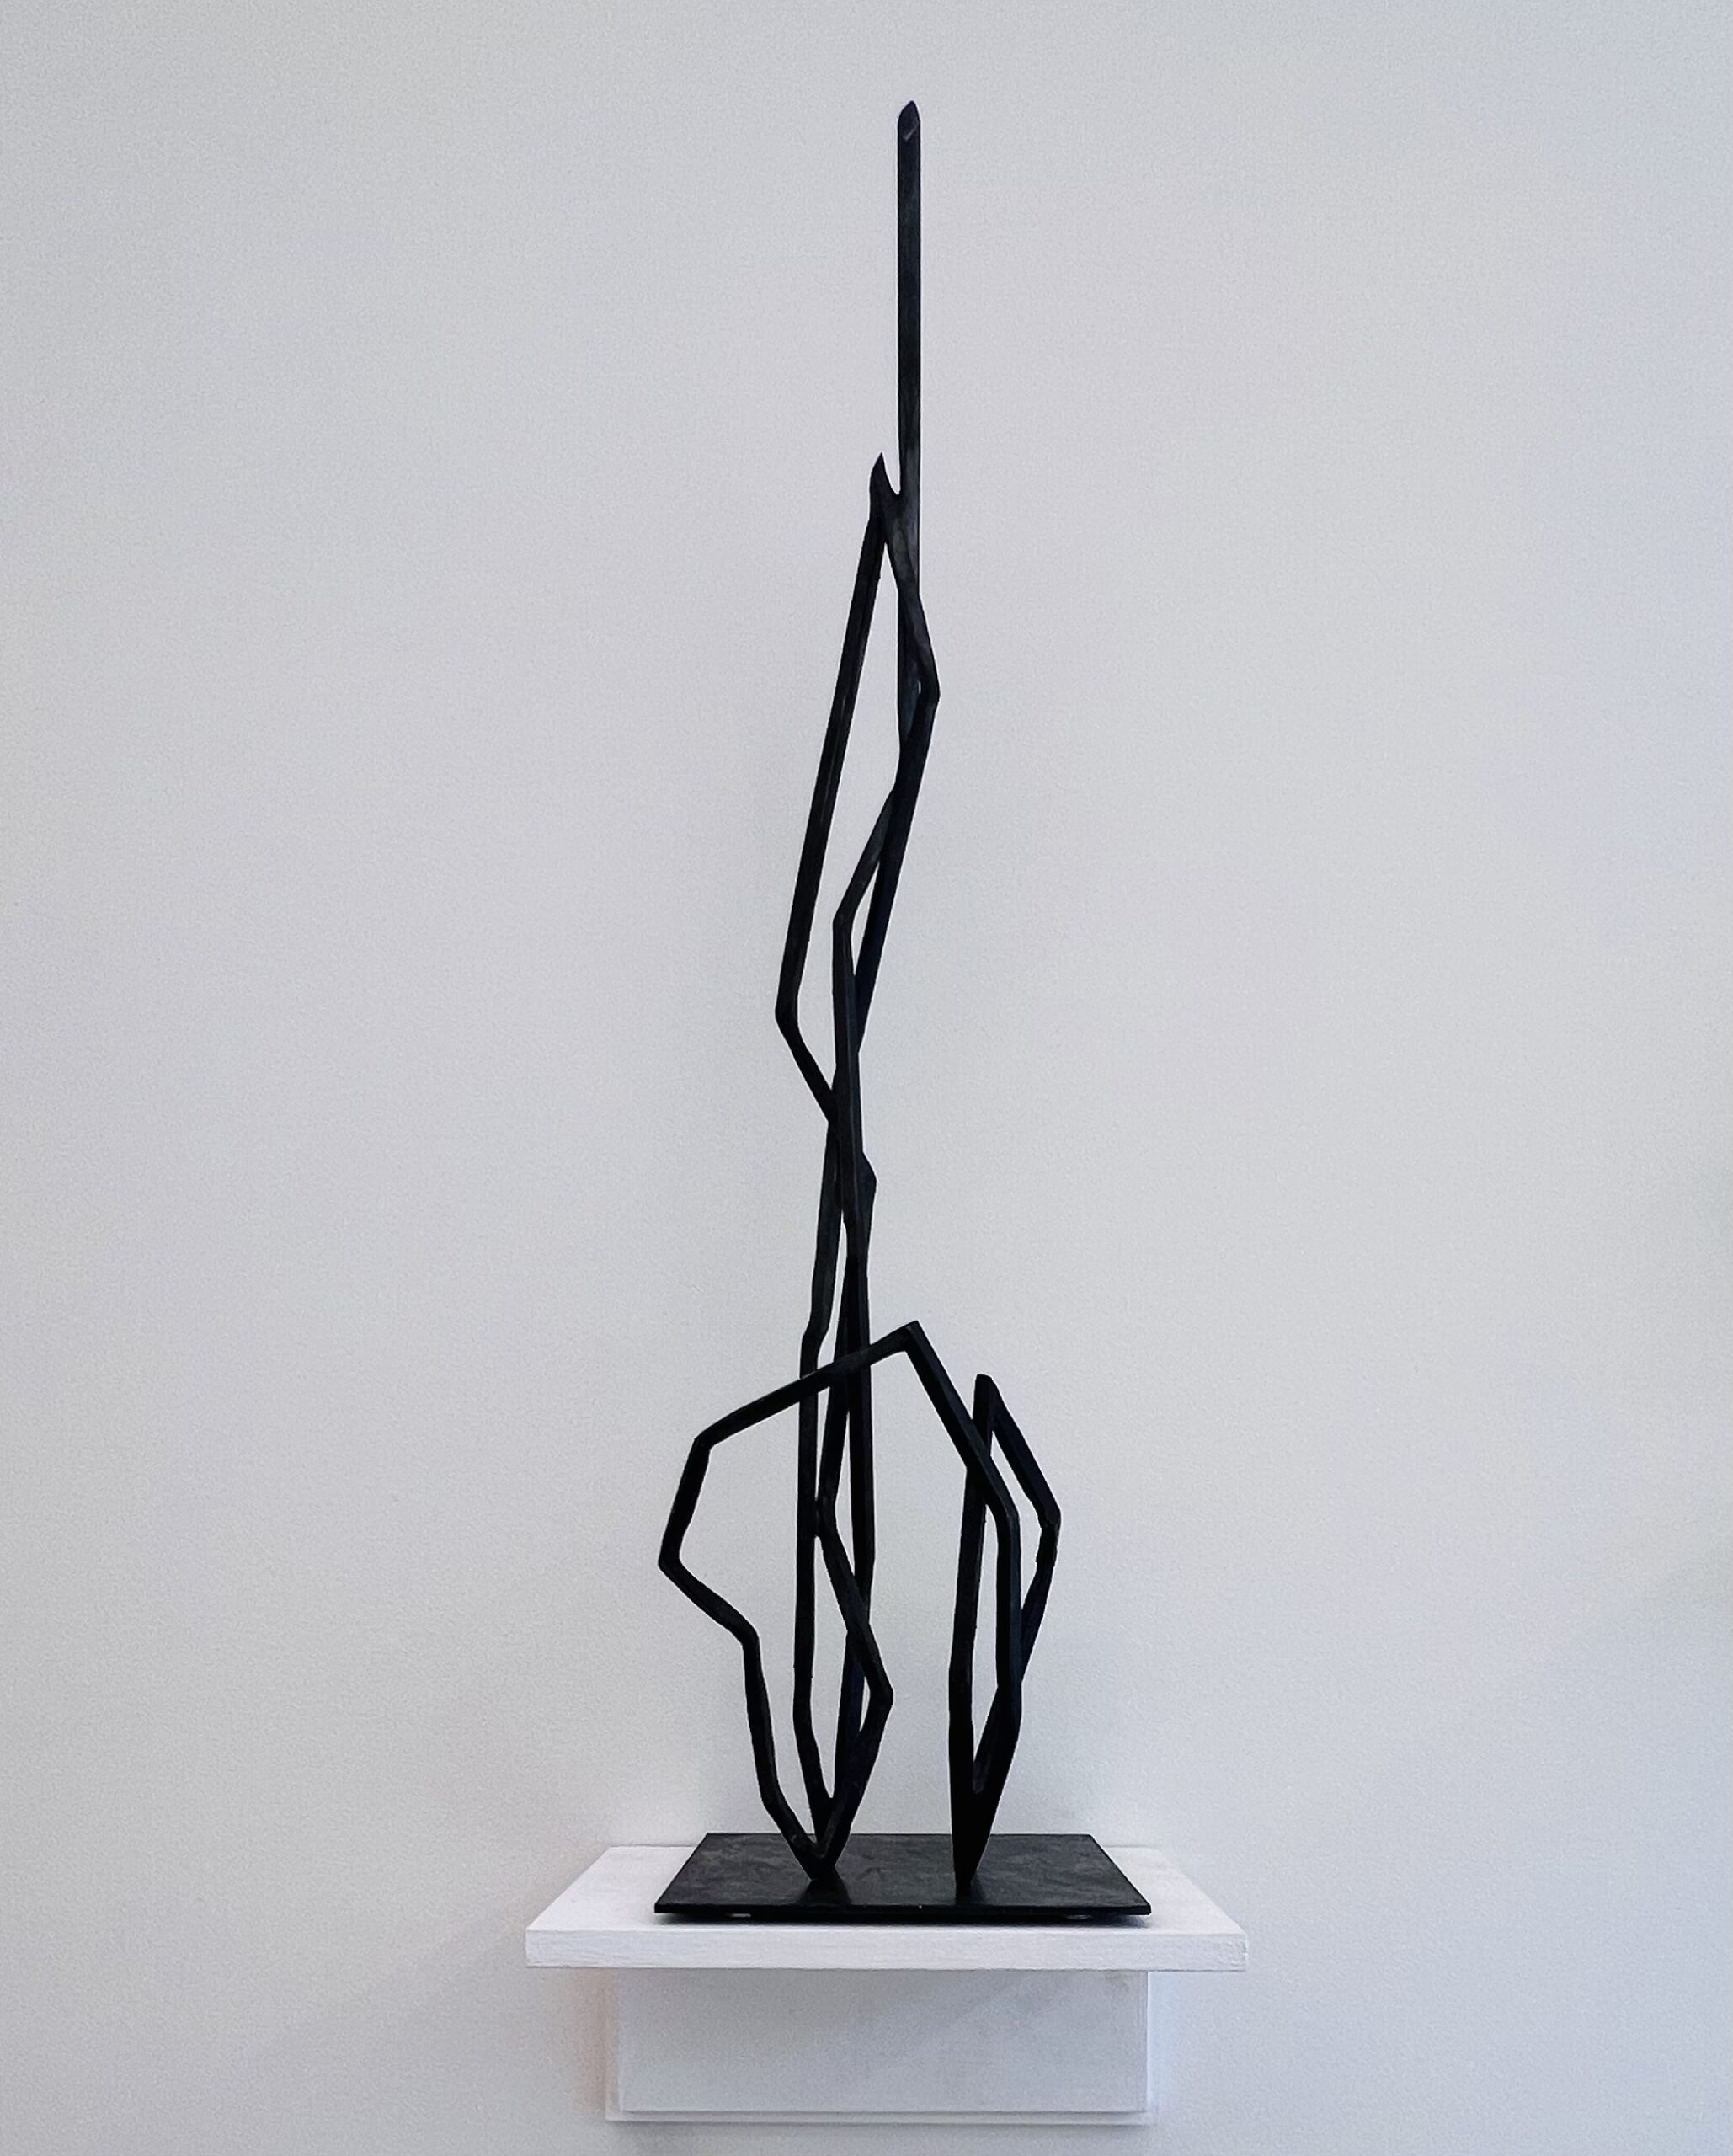 FENAT_M - Robert Schad sculpture